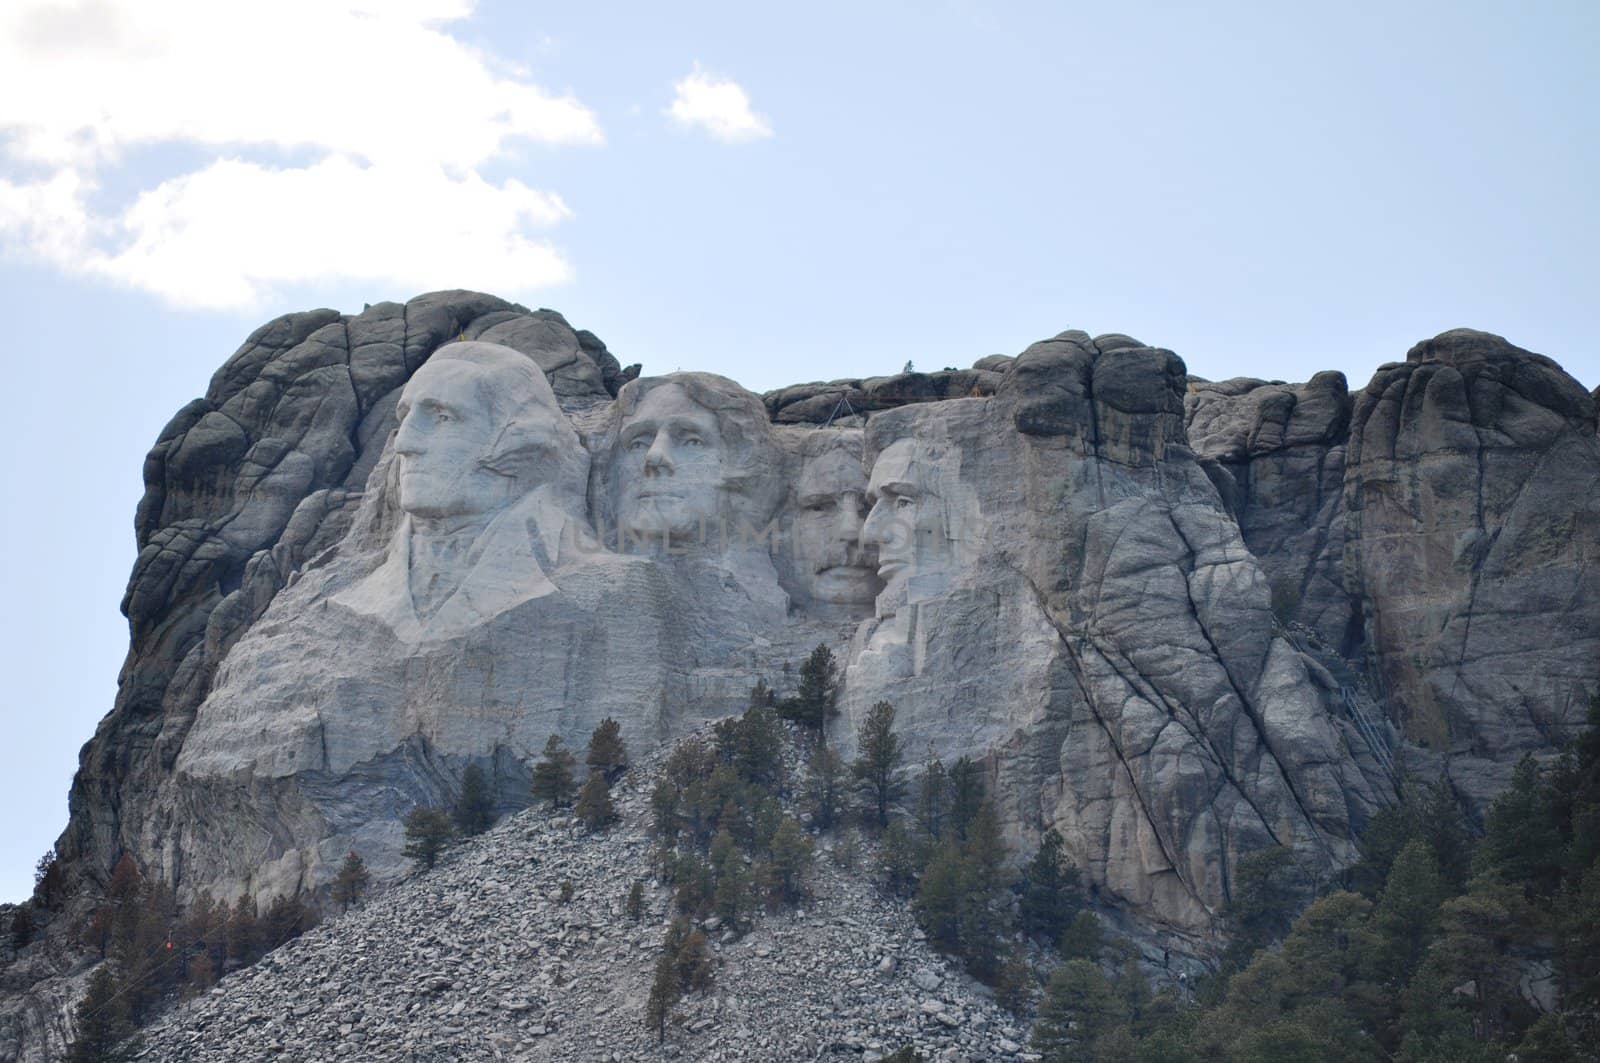 Mount Rushmore South Dakota by RefocusPhoto